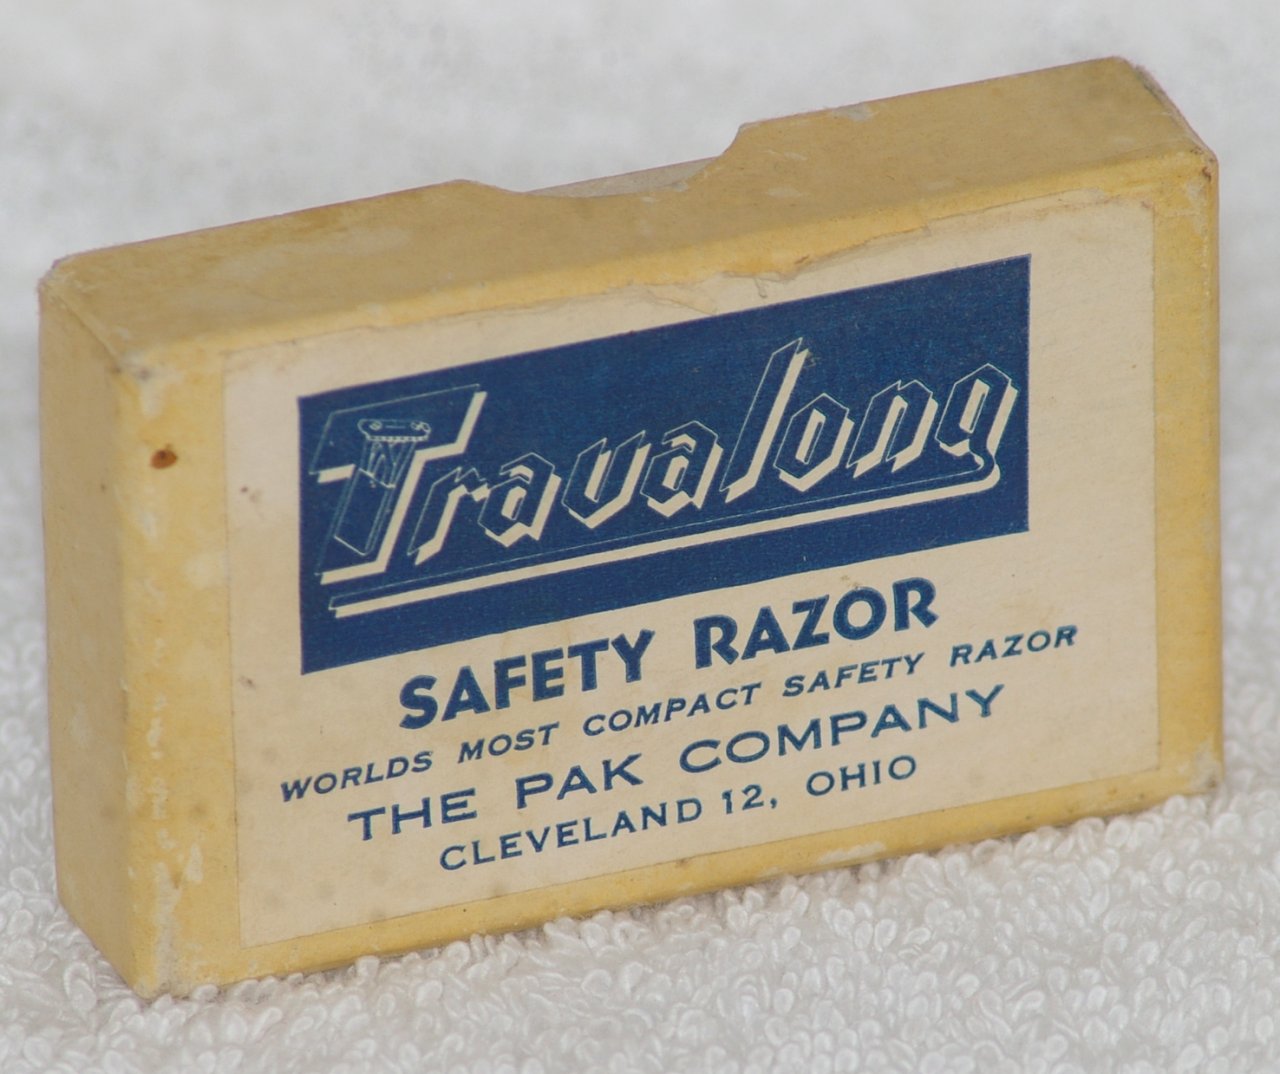 Travalong Safety Razor Compact Travel Razor from 1944